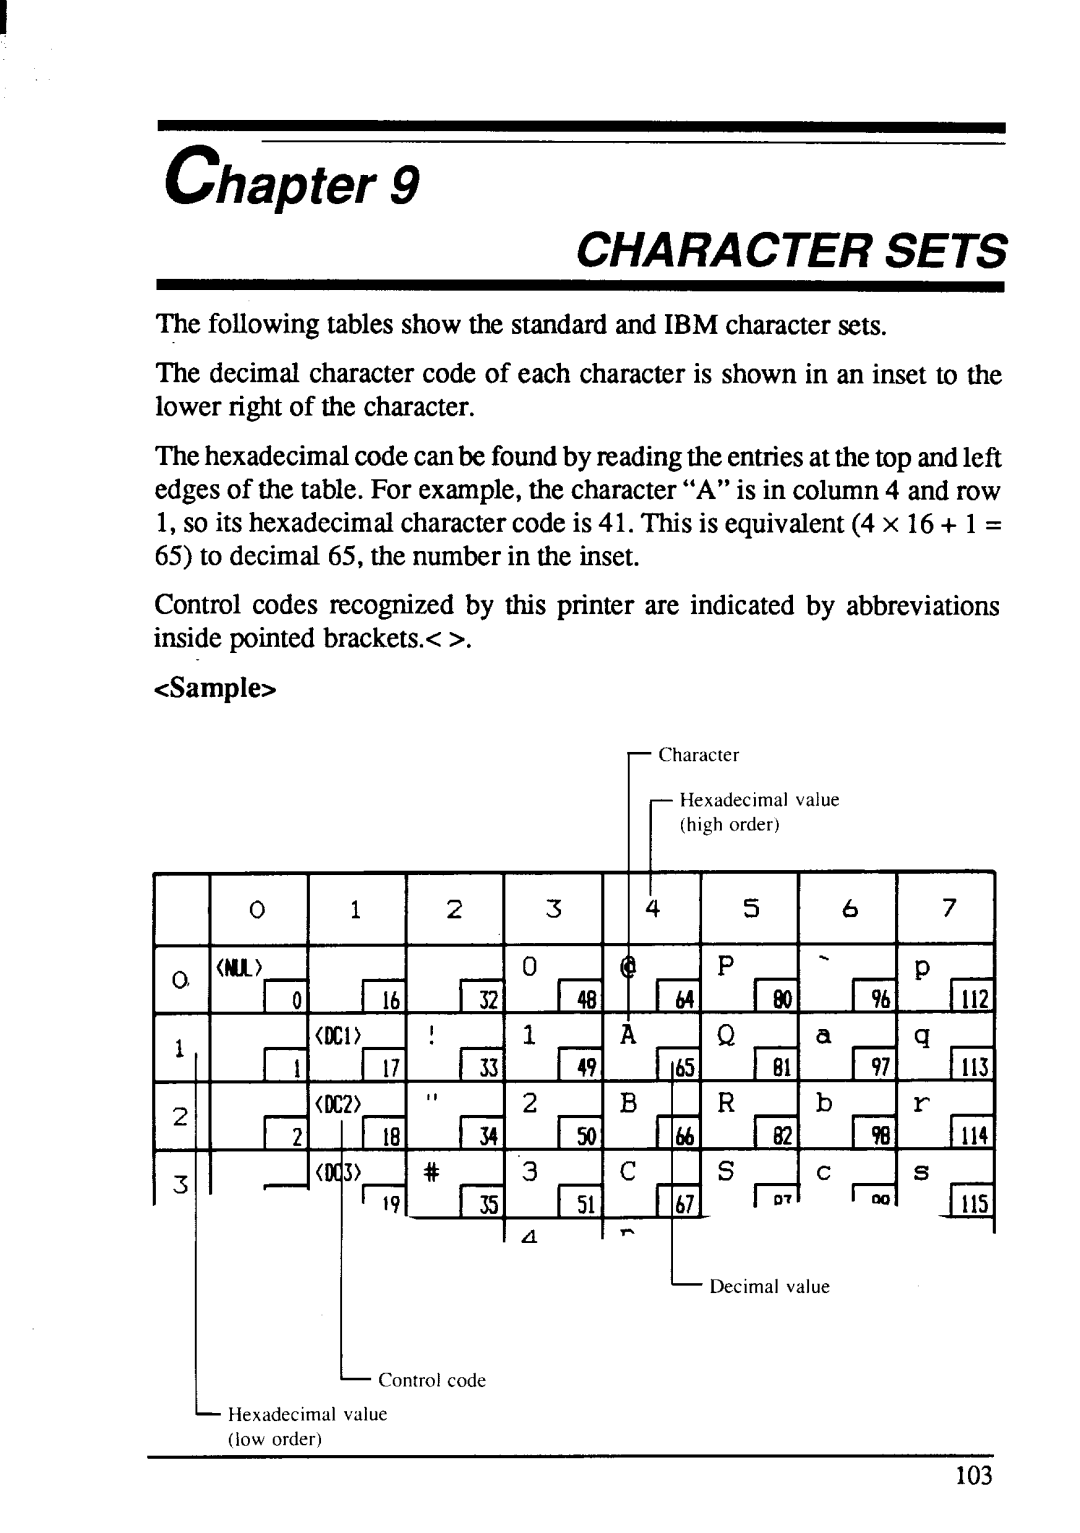 Star Micronics NX-1001 manual Character Sets, 1% L, chapter, cSample, riii 